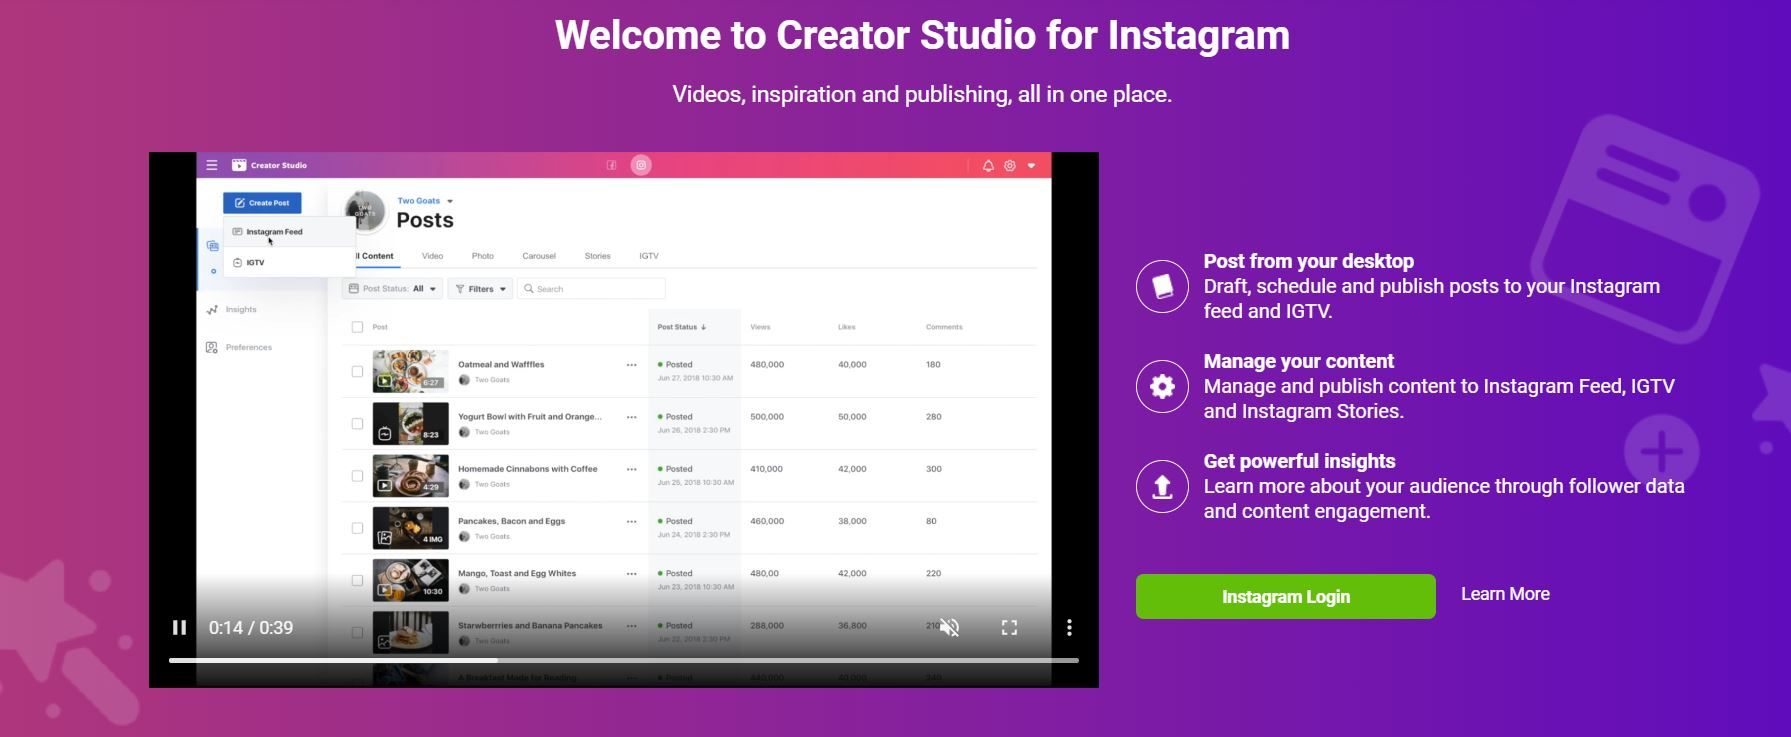 Creator Studio helps grow your social media circle